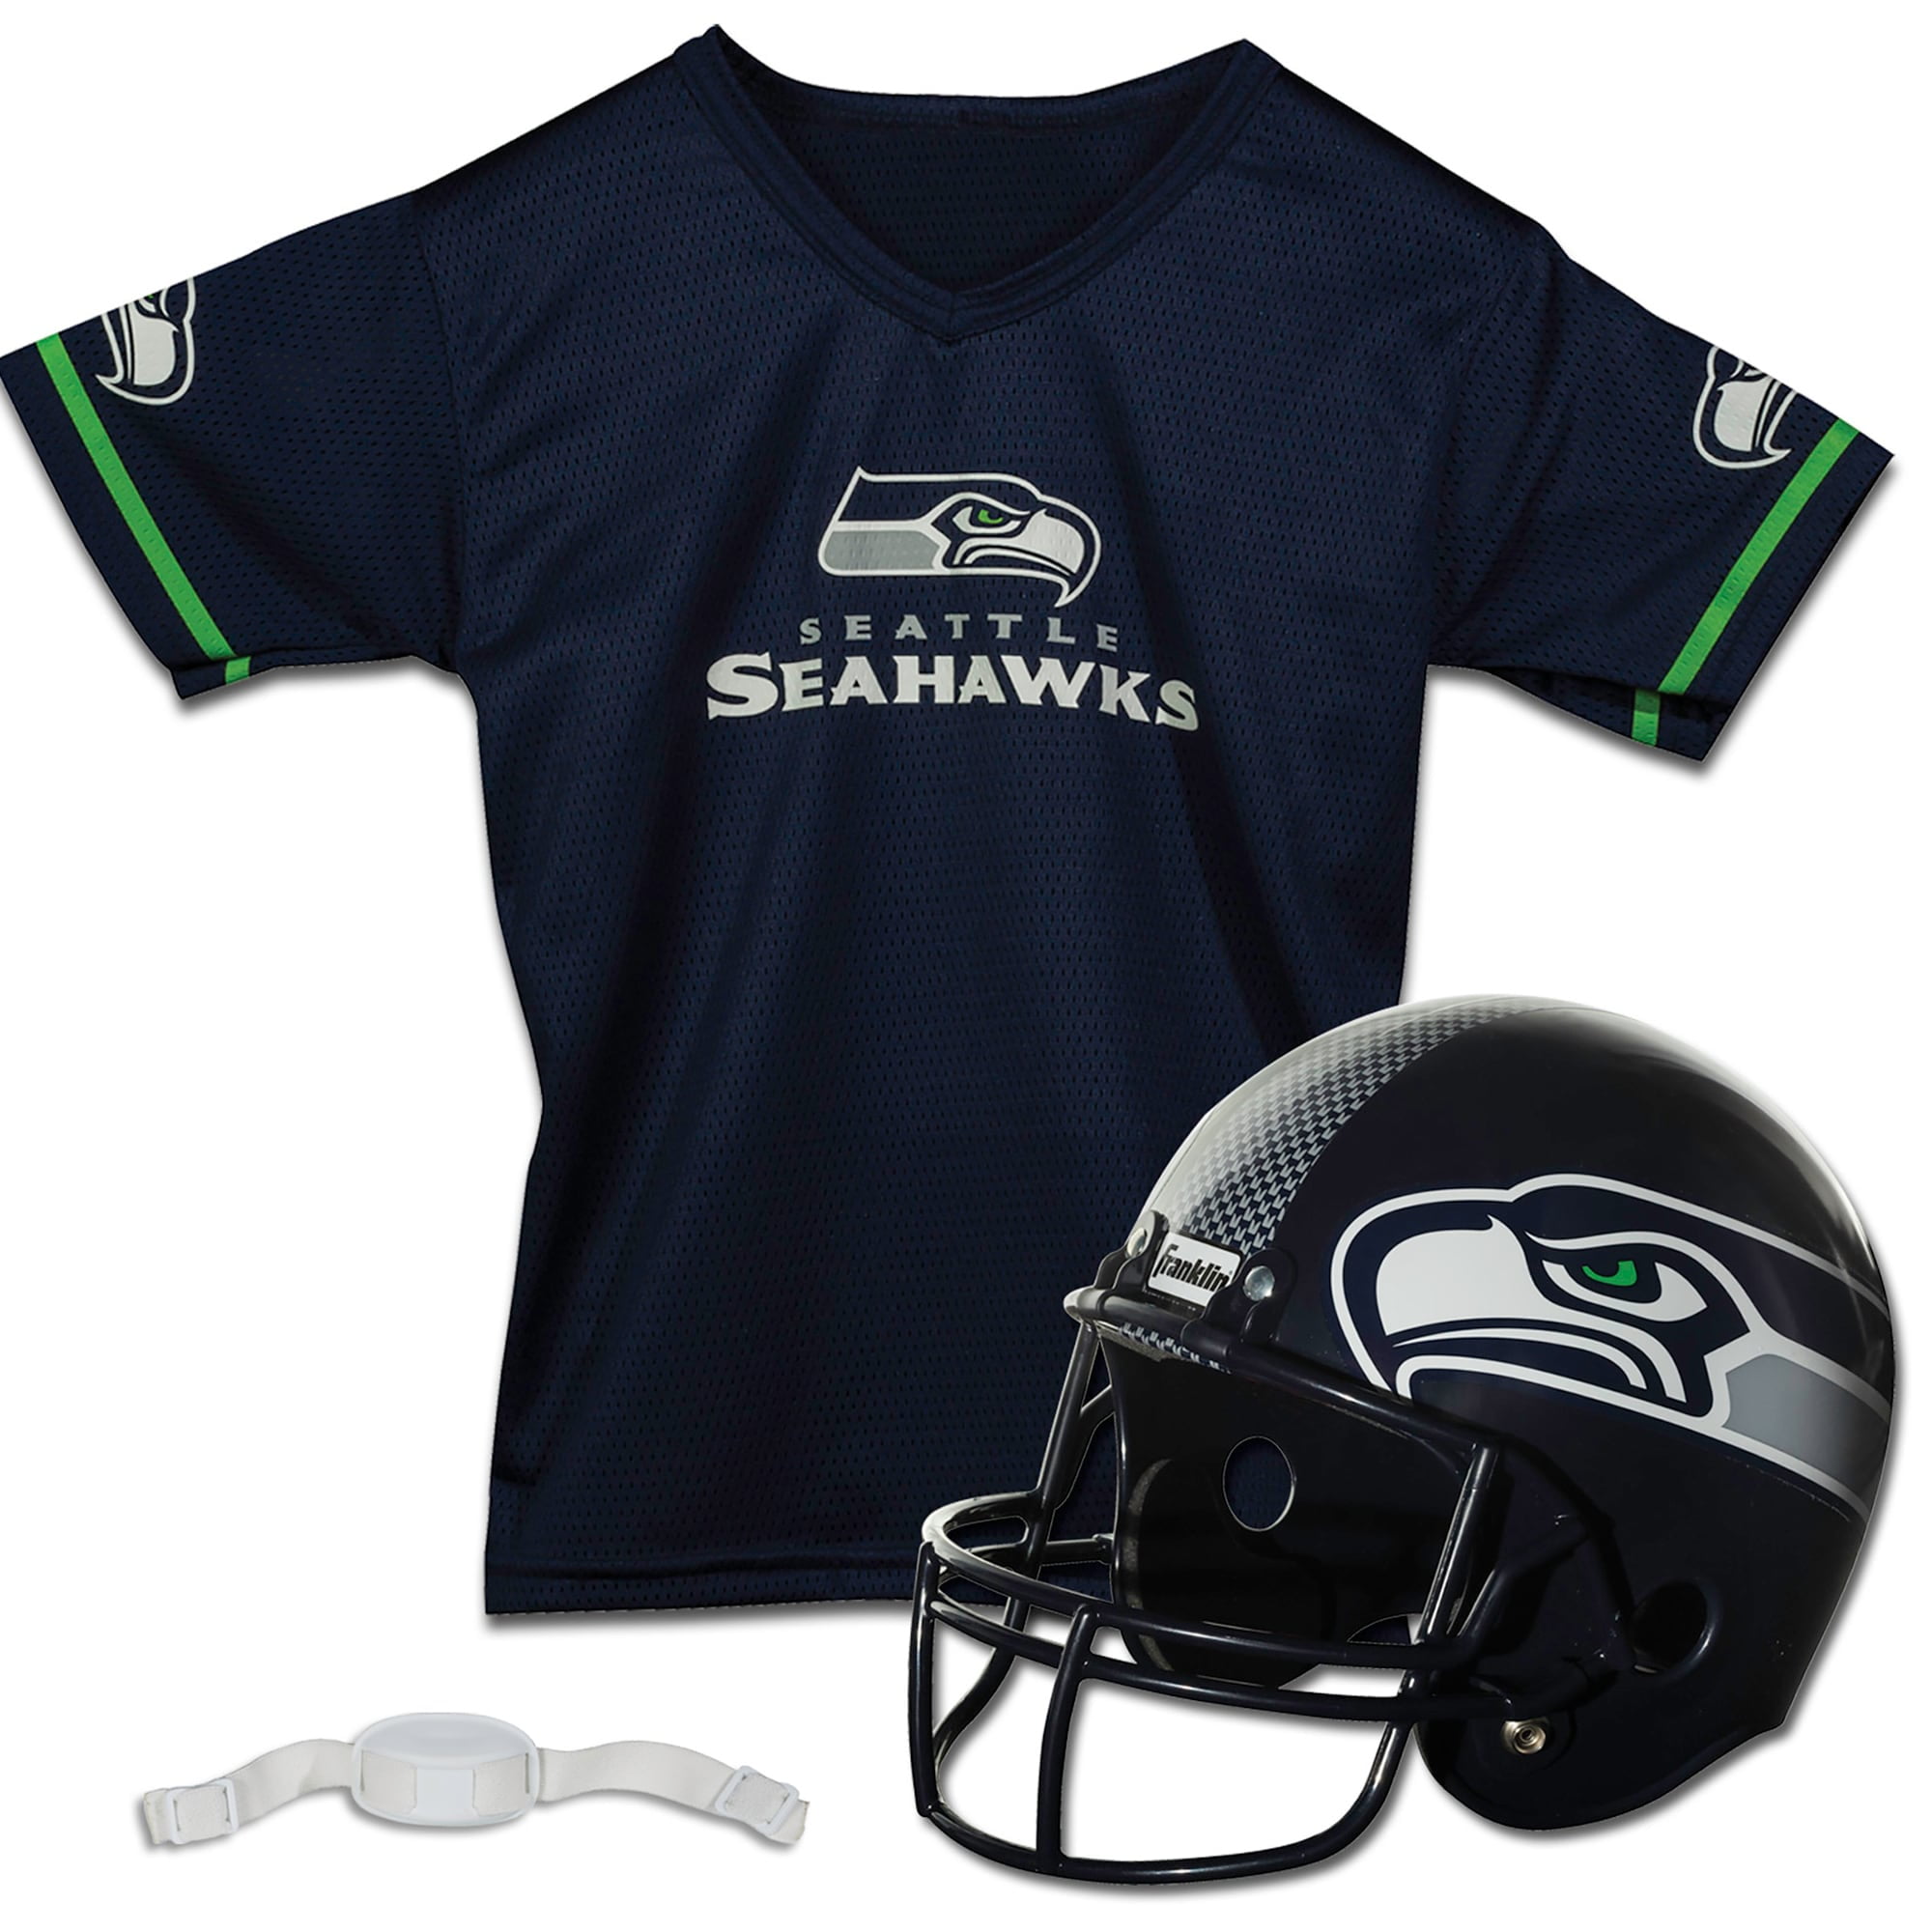 seahawks children's jersey